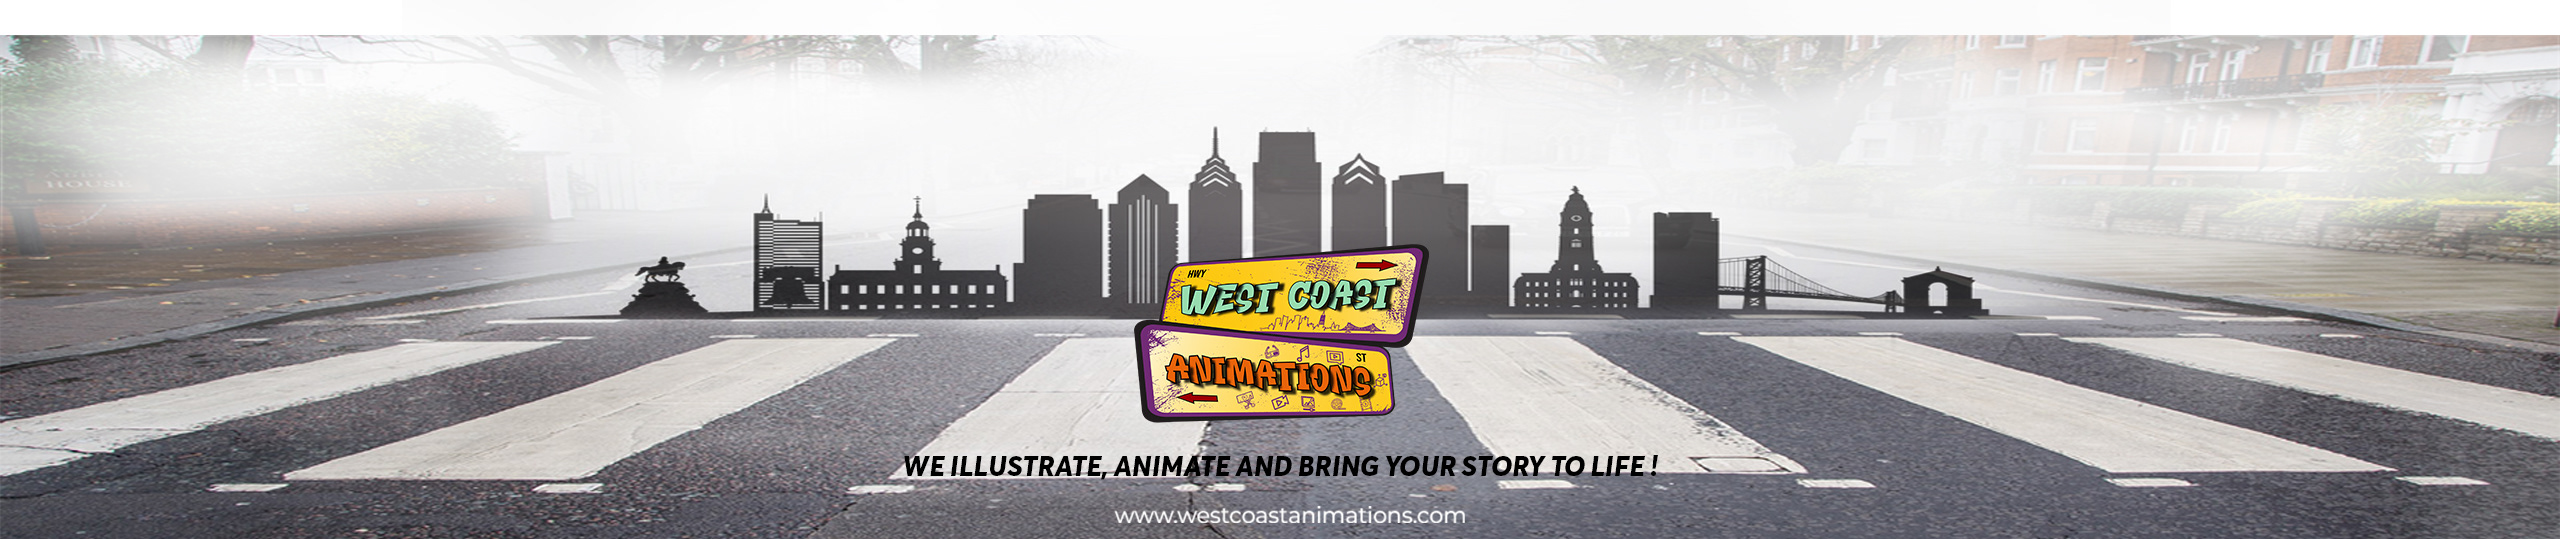 Westcoast Animations's profile banner